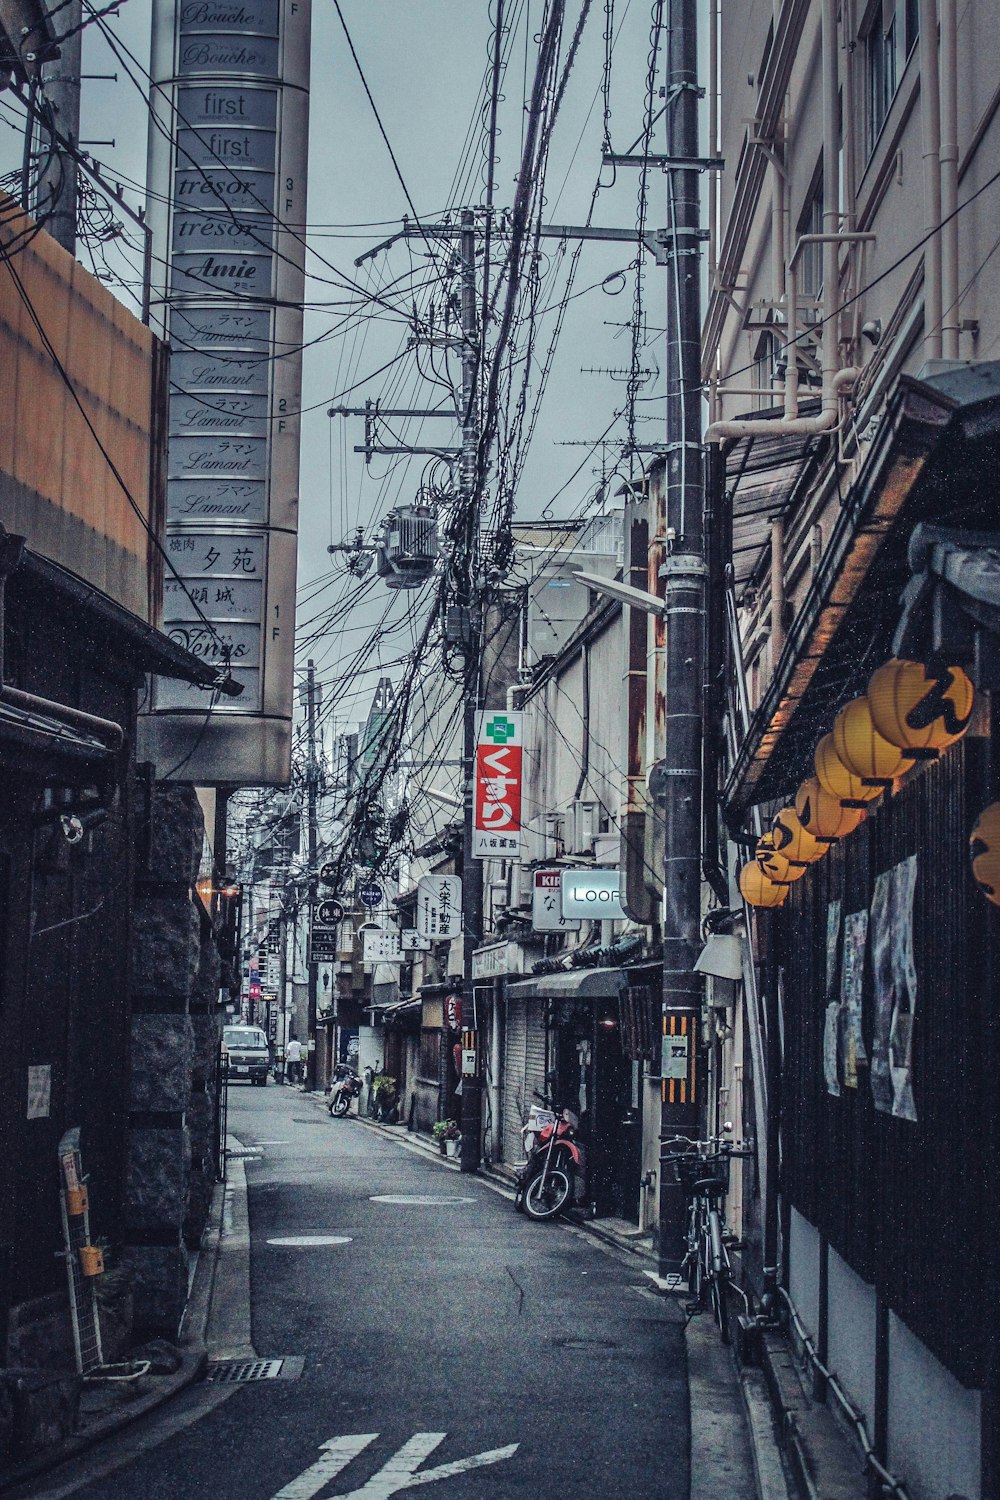 Japan Alley Pictures Download Free Images On Unsplash